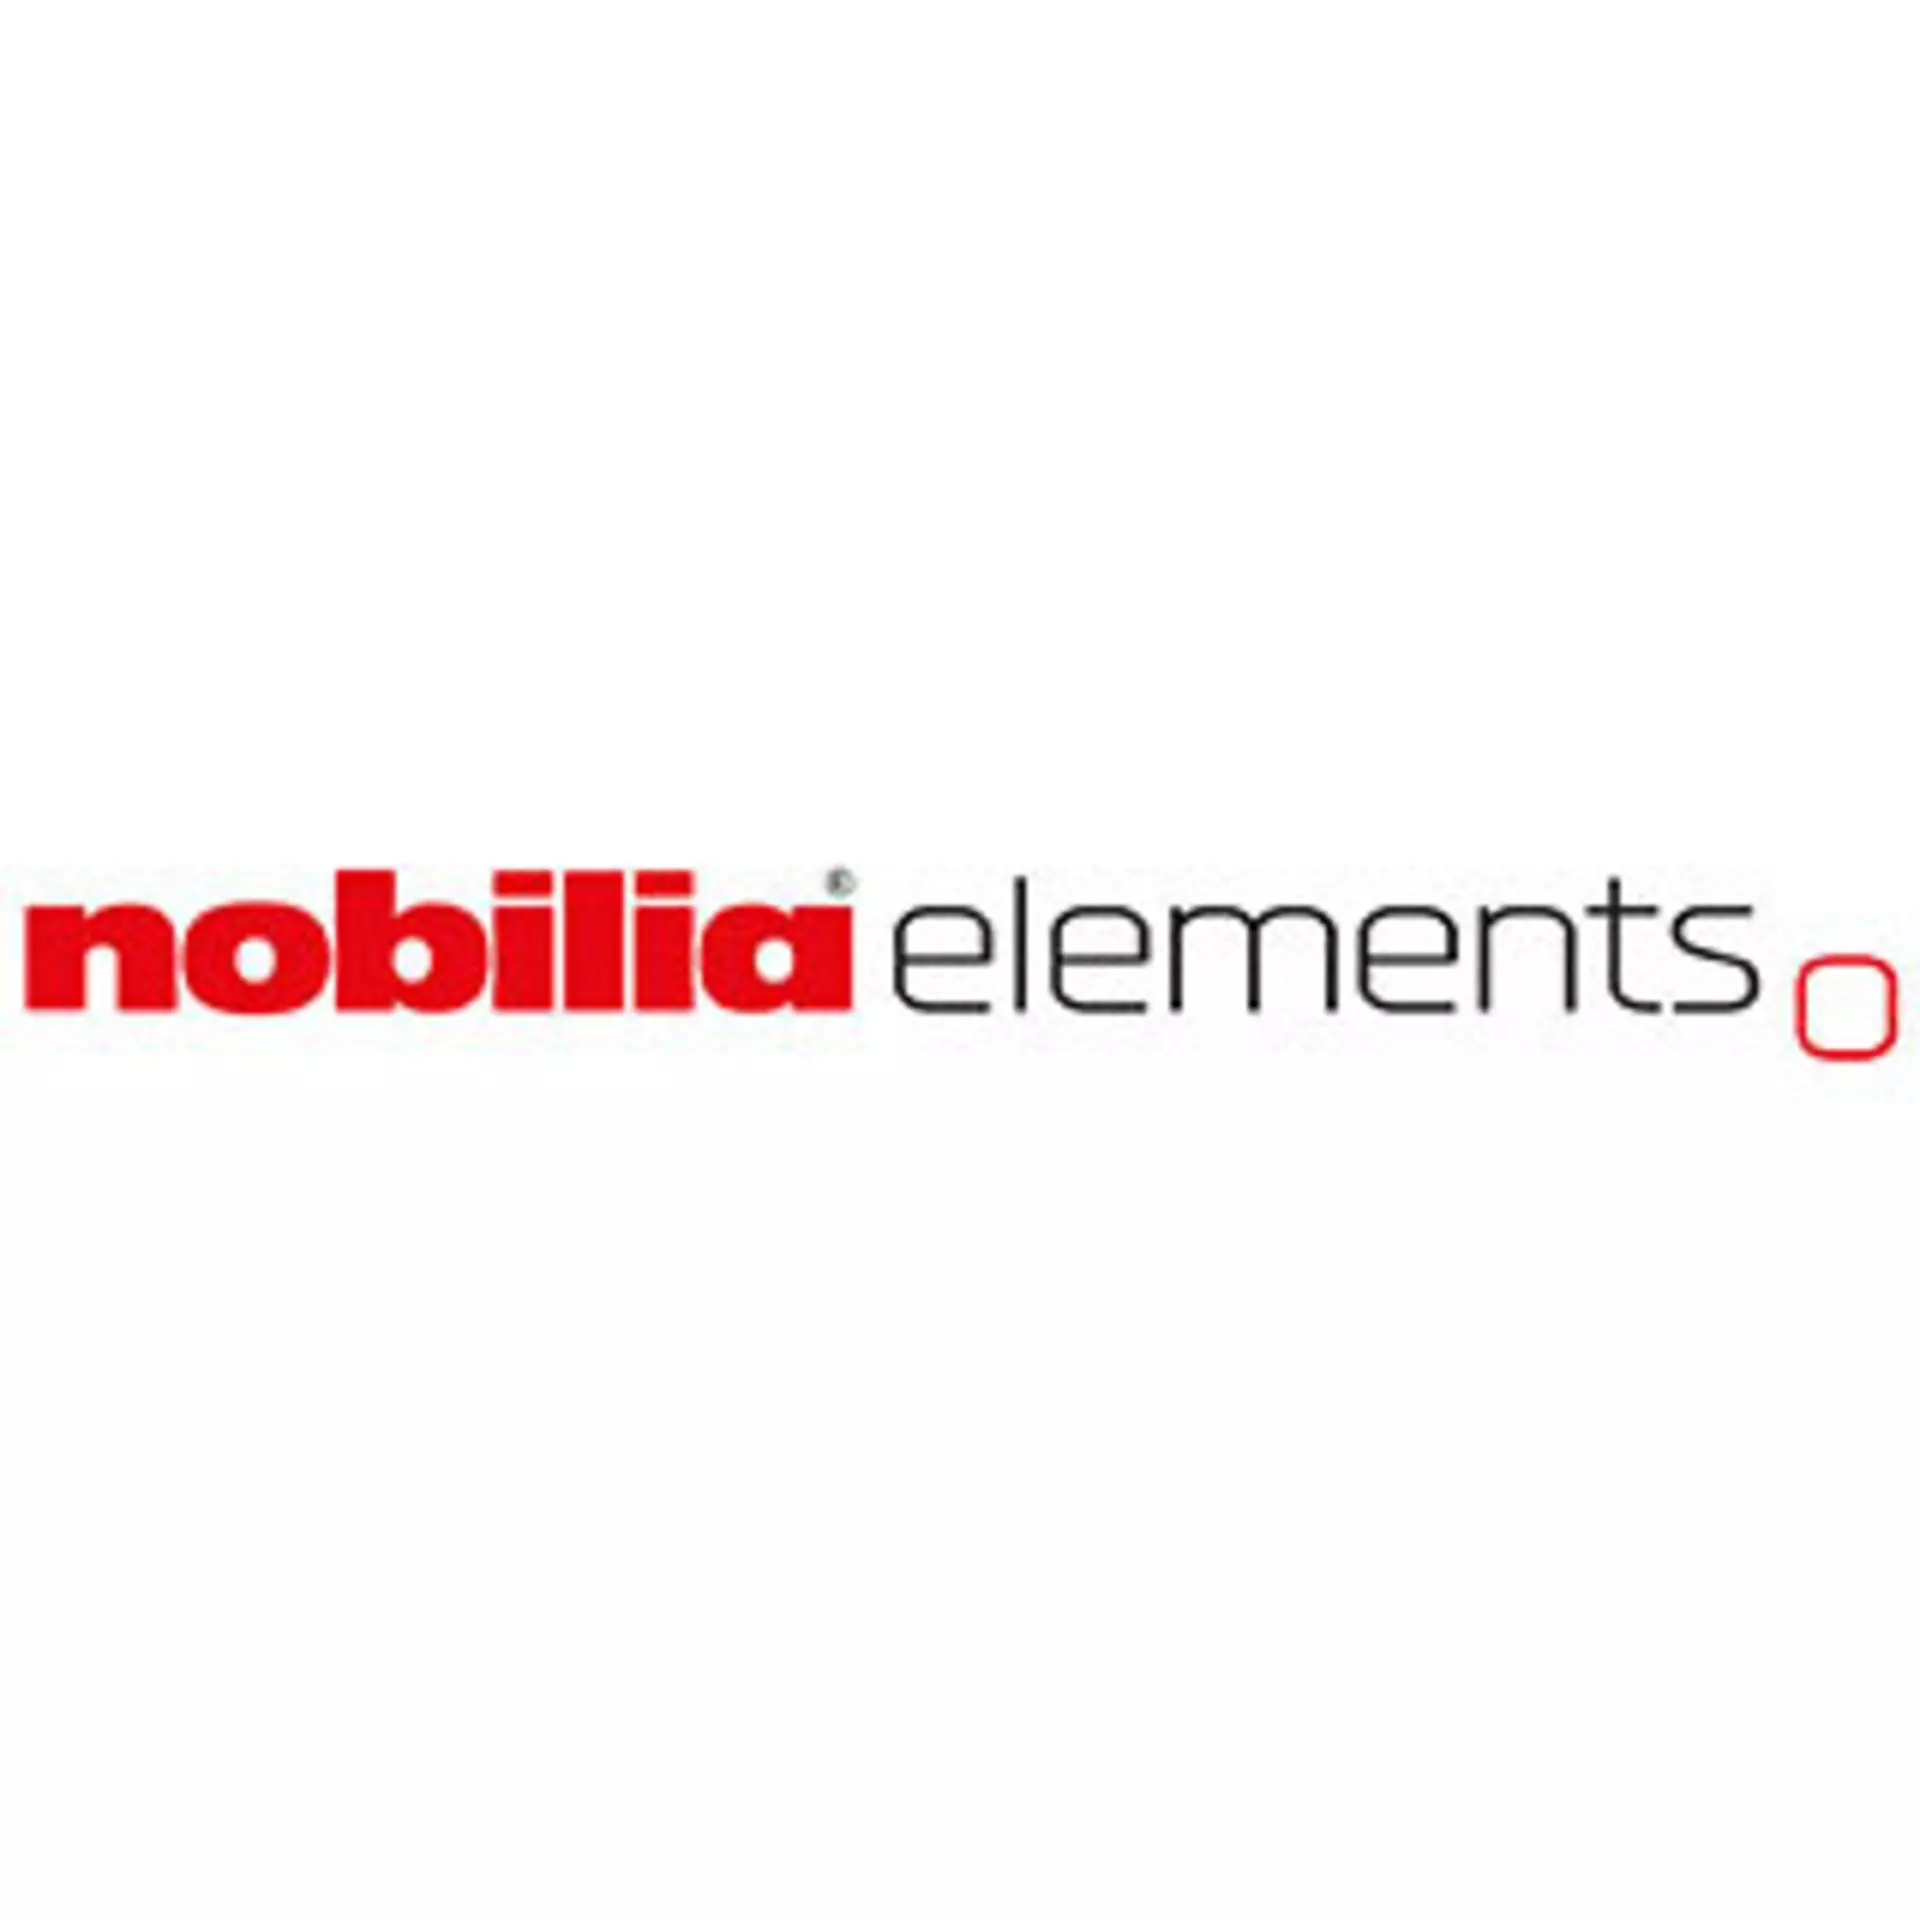 Logo nobilia elements